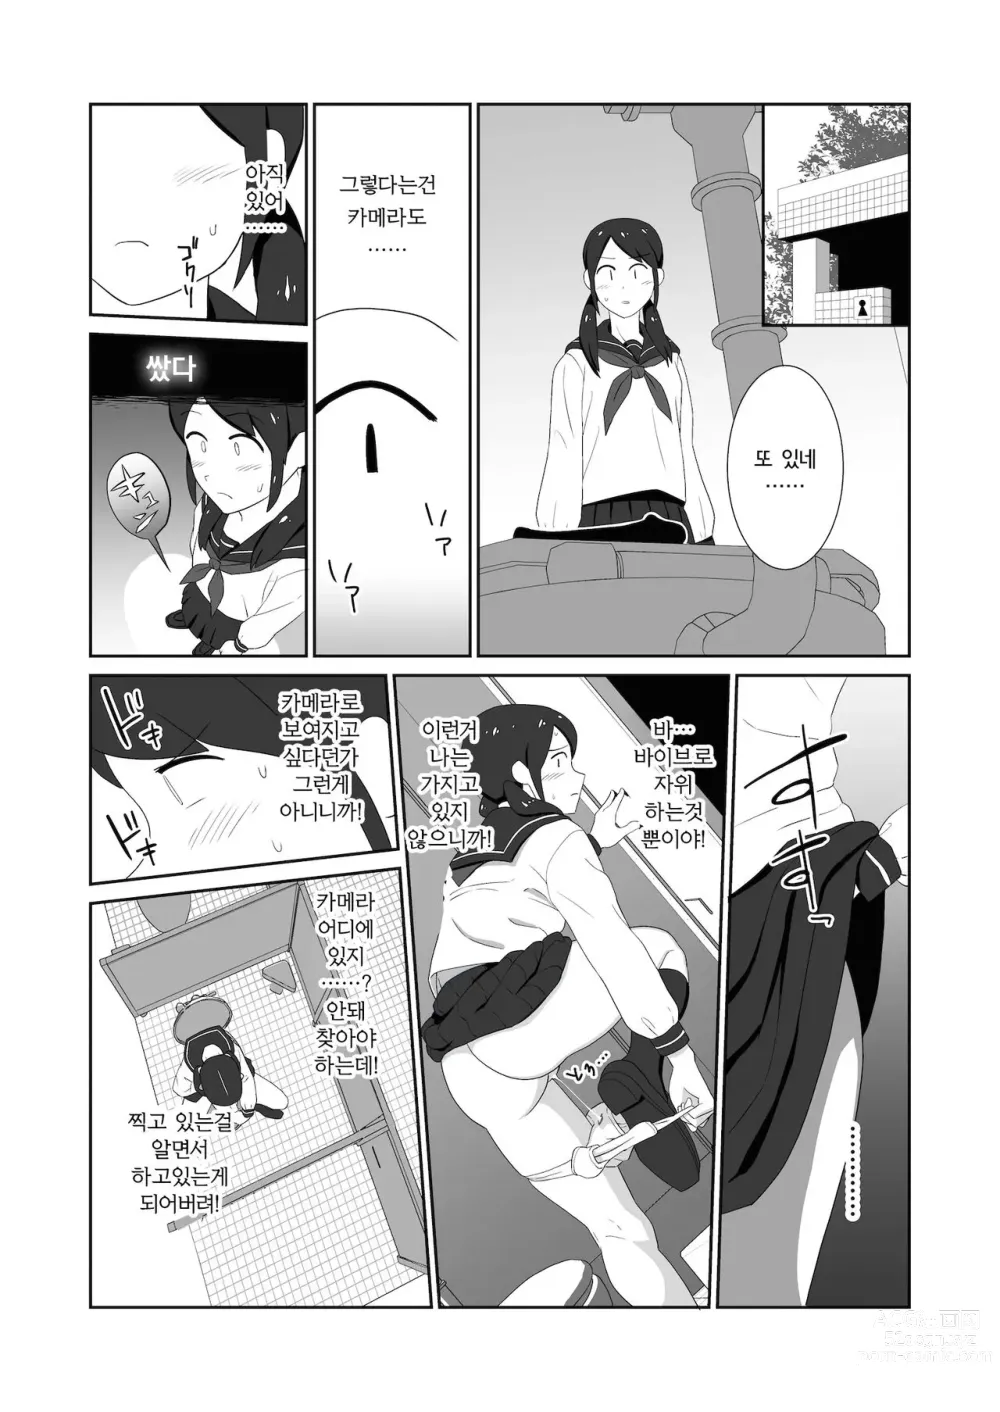 Page 7 of manga 공중화장실에서 도촬당하며 자위하는것에 빠져버린 여자